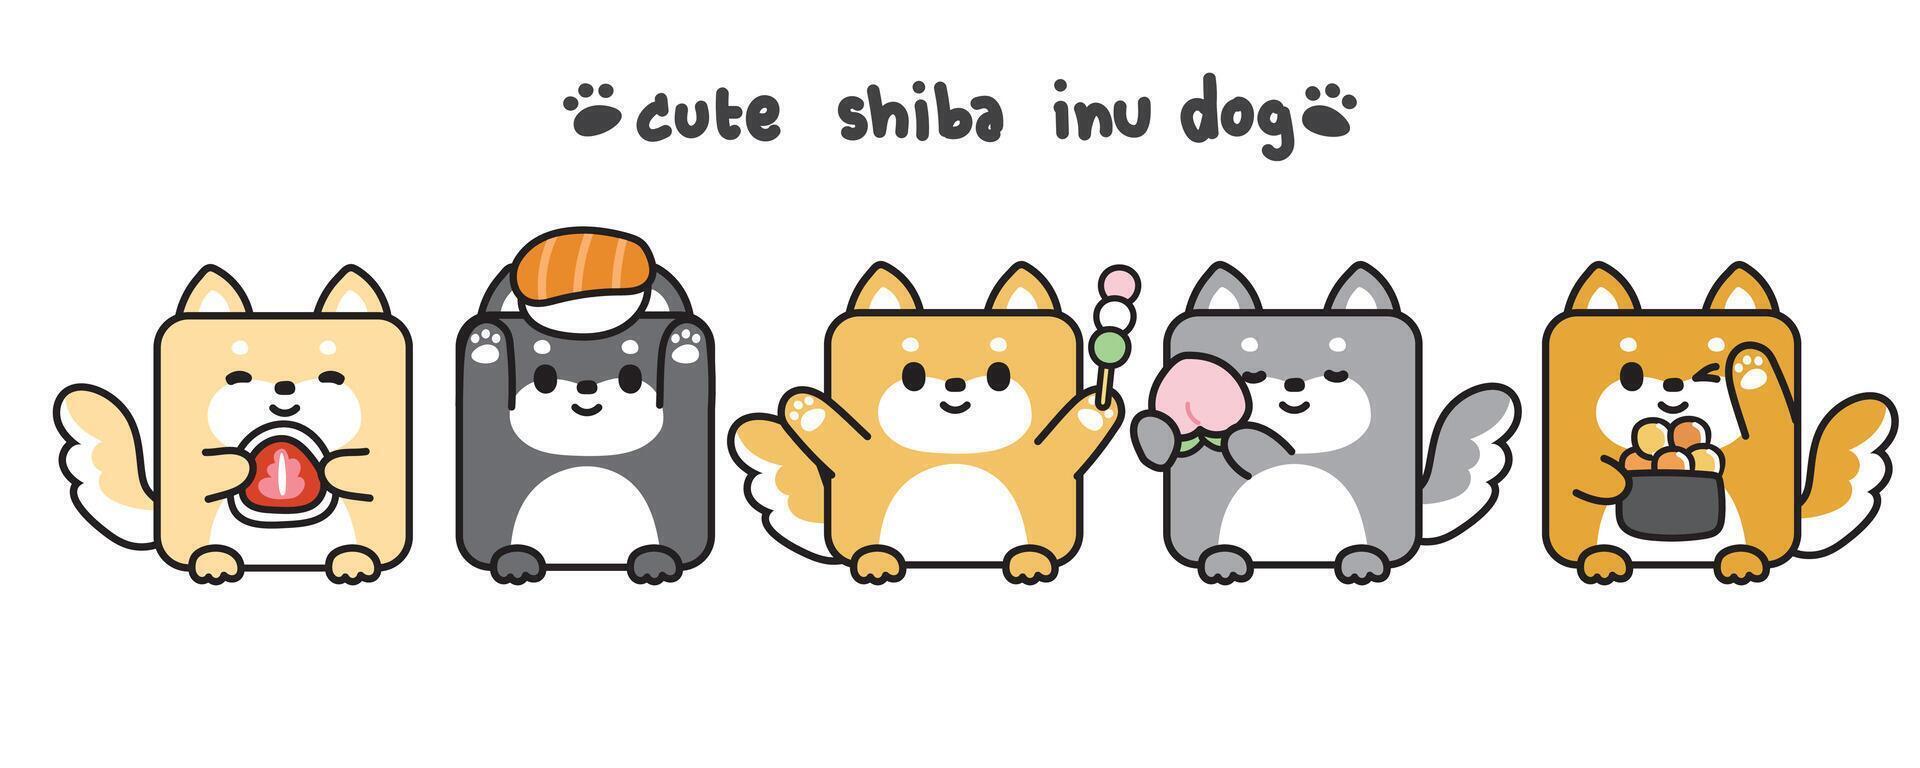 reeks van shiba inu hond in plein vorm met voedsel in divers poses.japans huisdier dier karakter ontwerp.dessert en zoet van japan.kawaii.vector.illustratie. vector